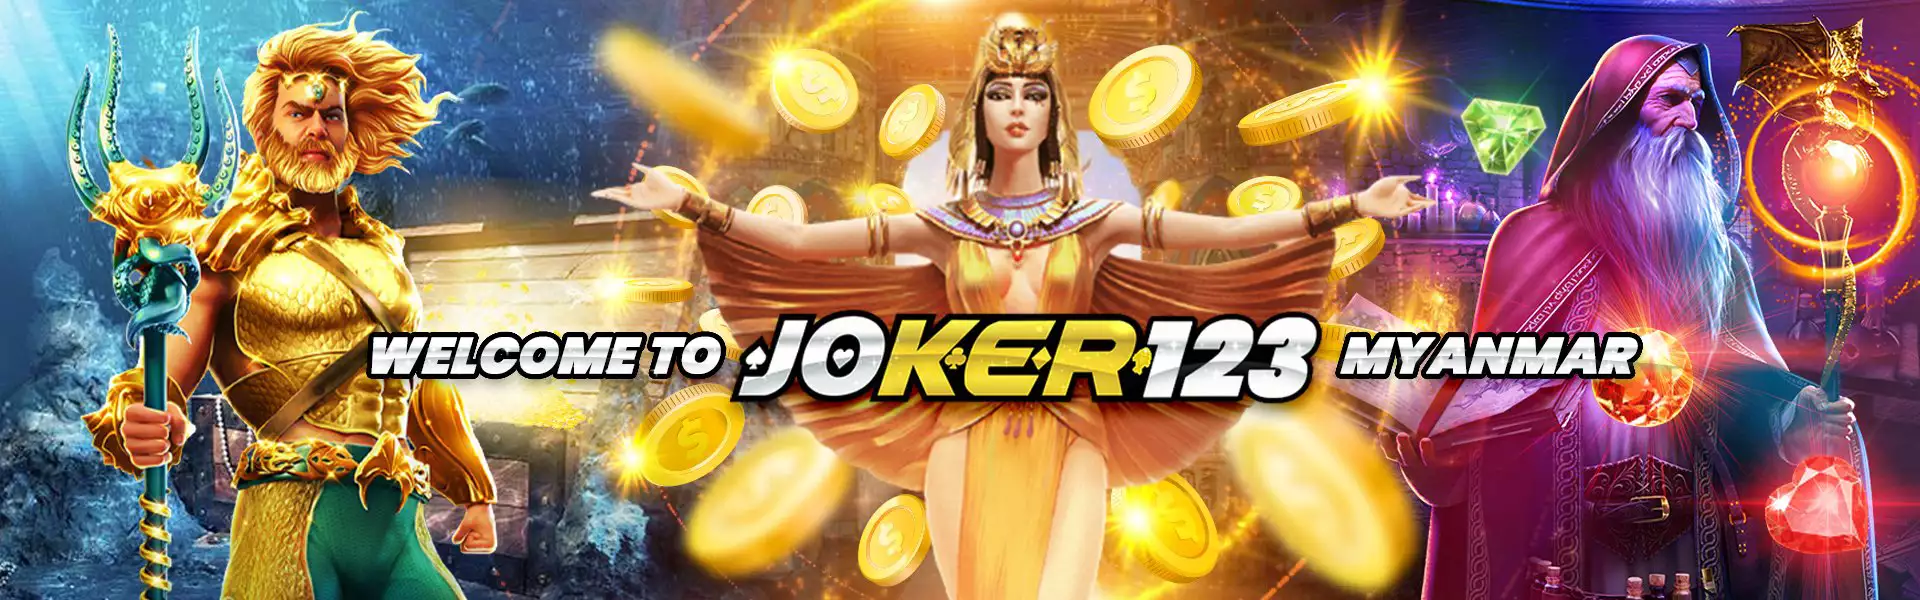 Welcome to Joker123 Myanmar Slot Game